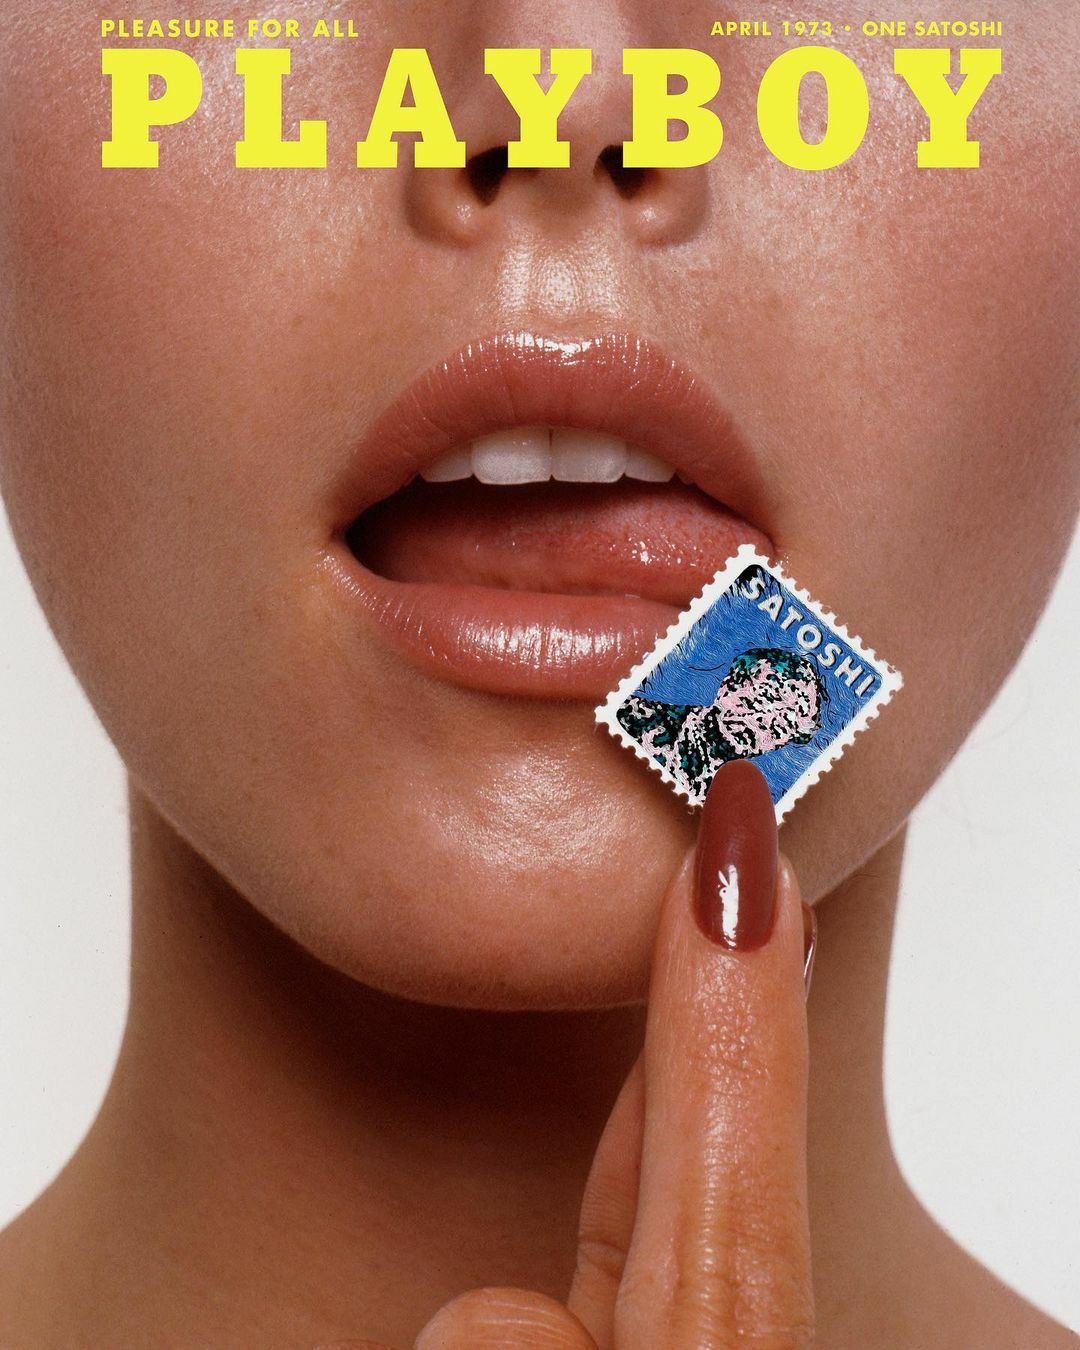 1080x1350, 201 Kb / Playboy,  Satoshi,  губы, зубы, 1973, марка